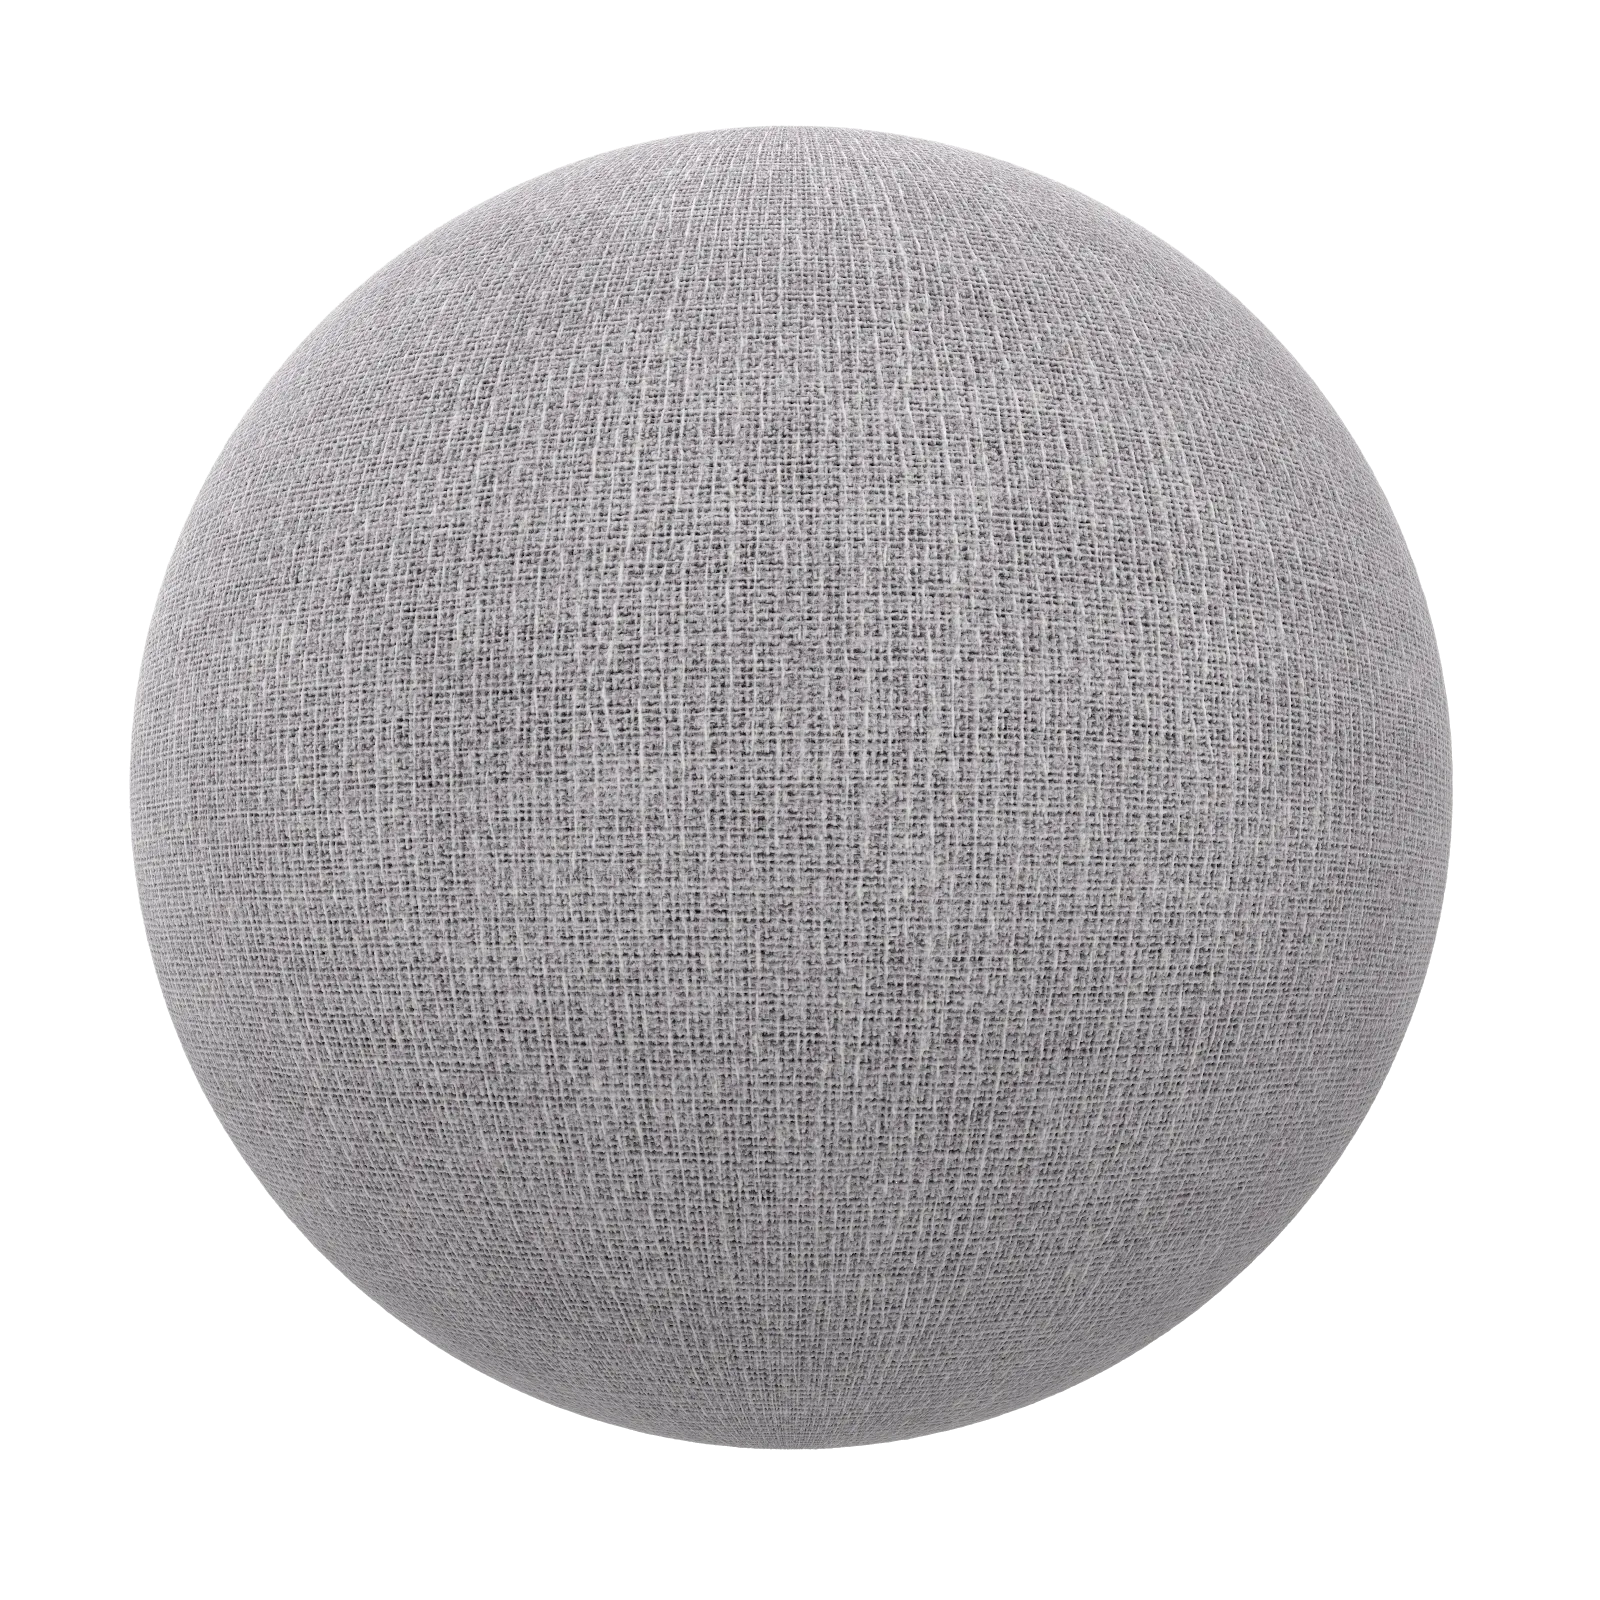 PBR CGAXIS TEXTURES – FABRICS – Grey Fabric 12